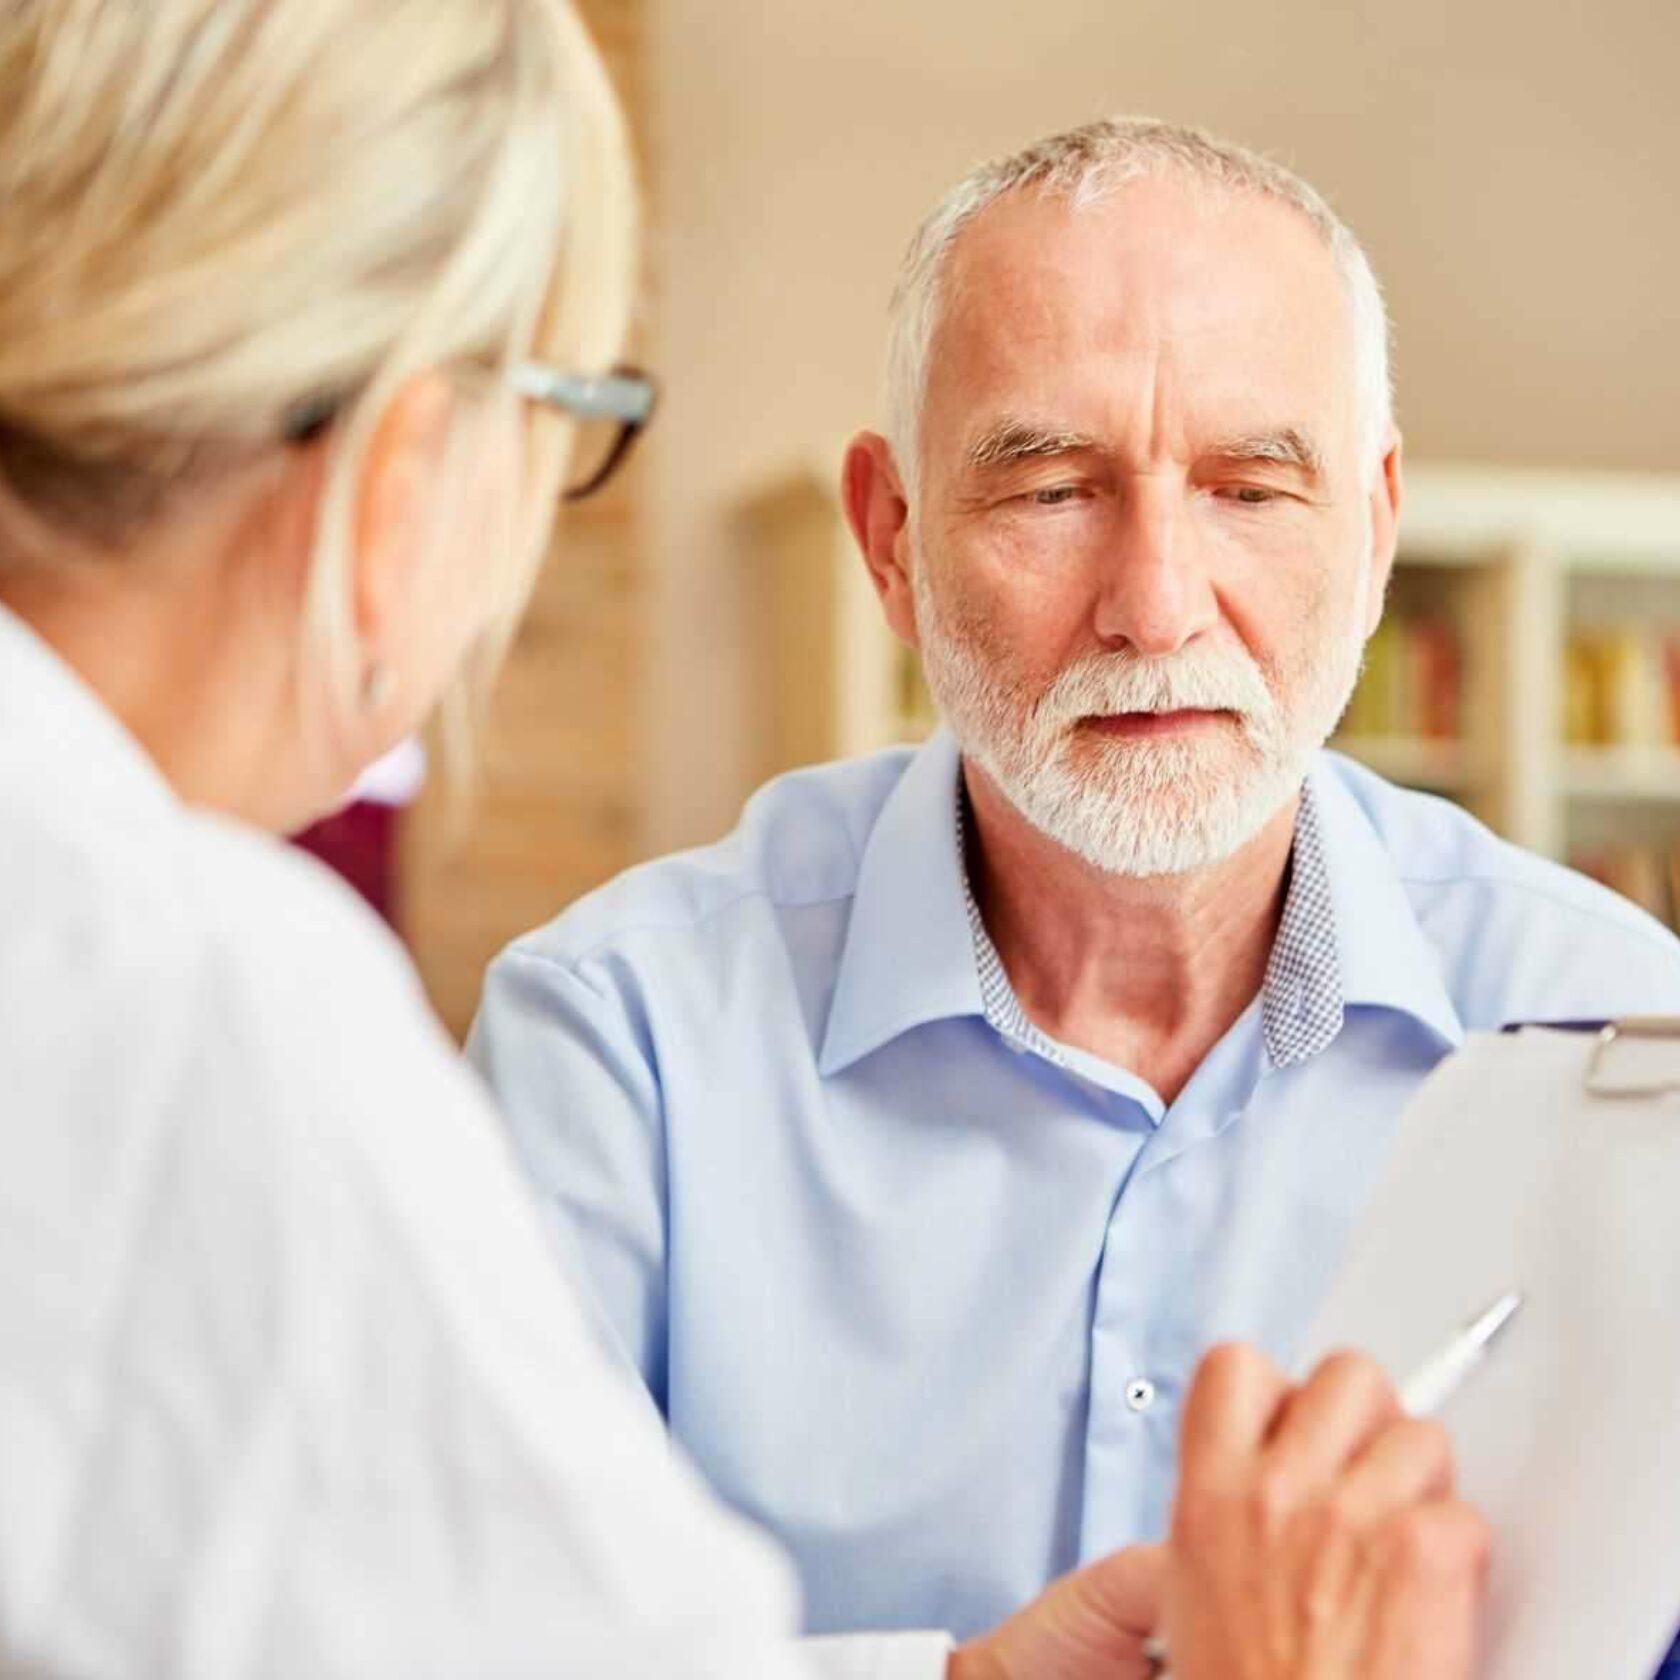 Onkologin berät älteren Patienten mit Fragebogen